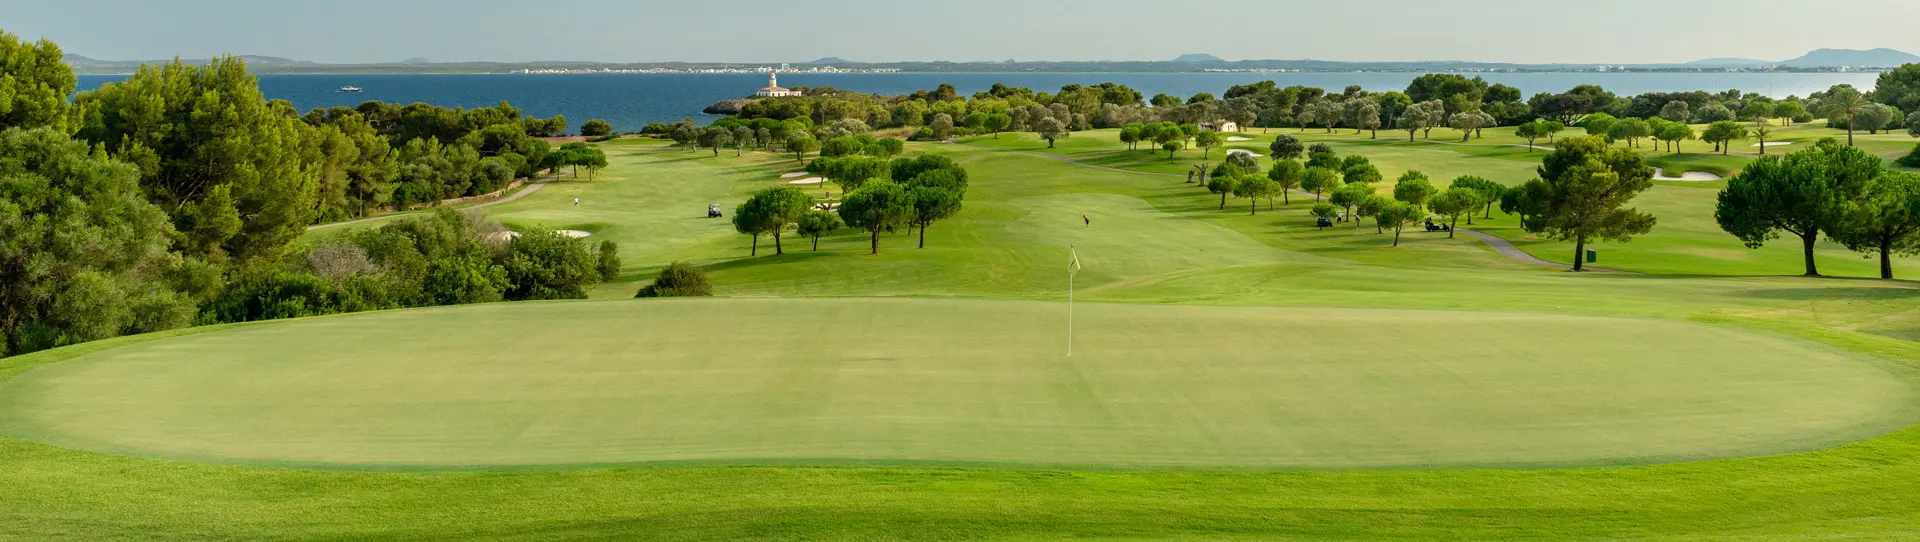 Spain Golf Driving Range - Club de Golf Alcanada Driving Range - Photo 1